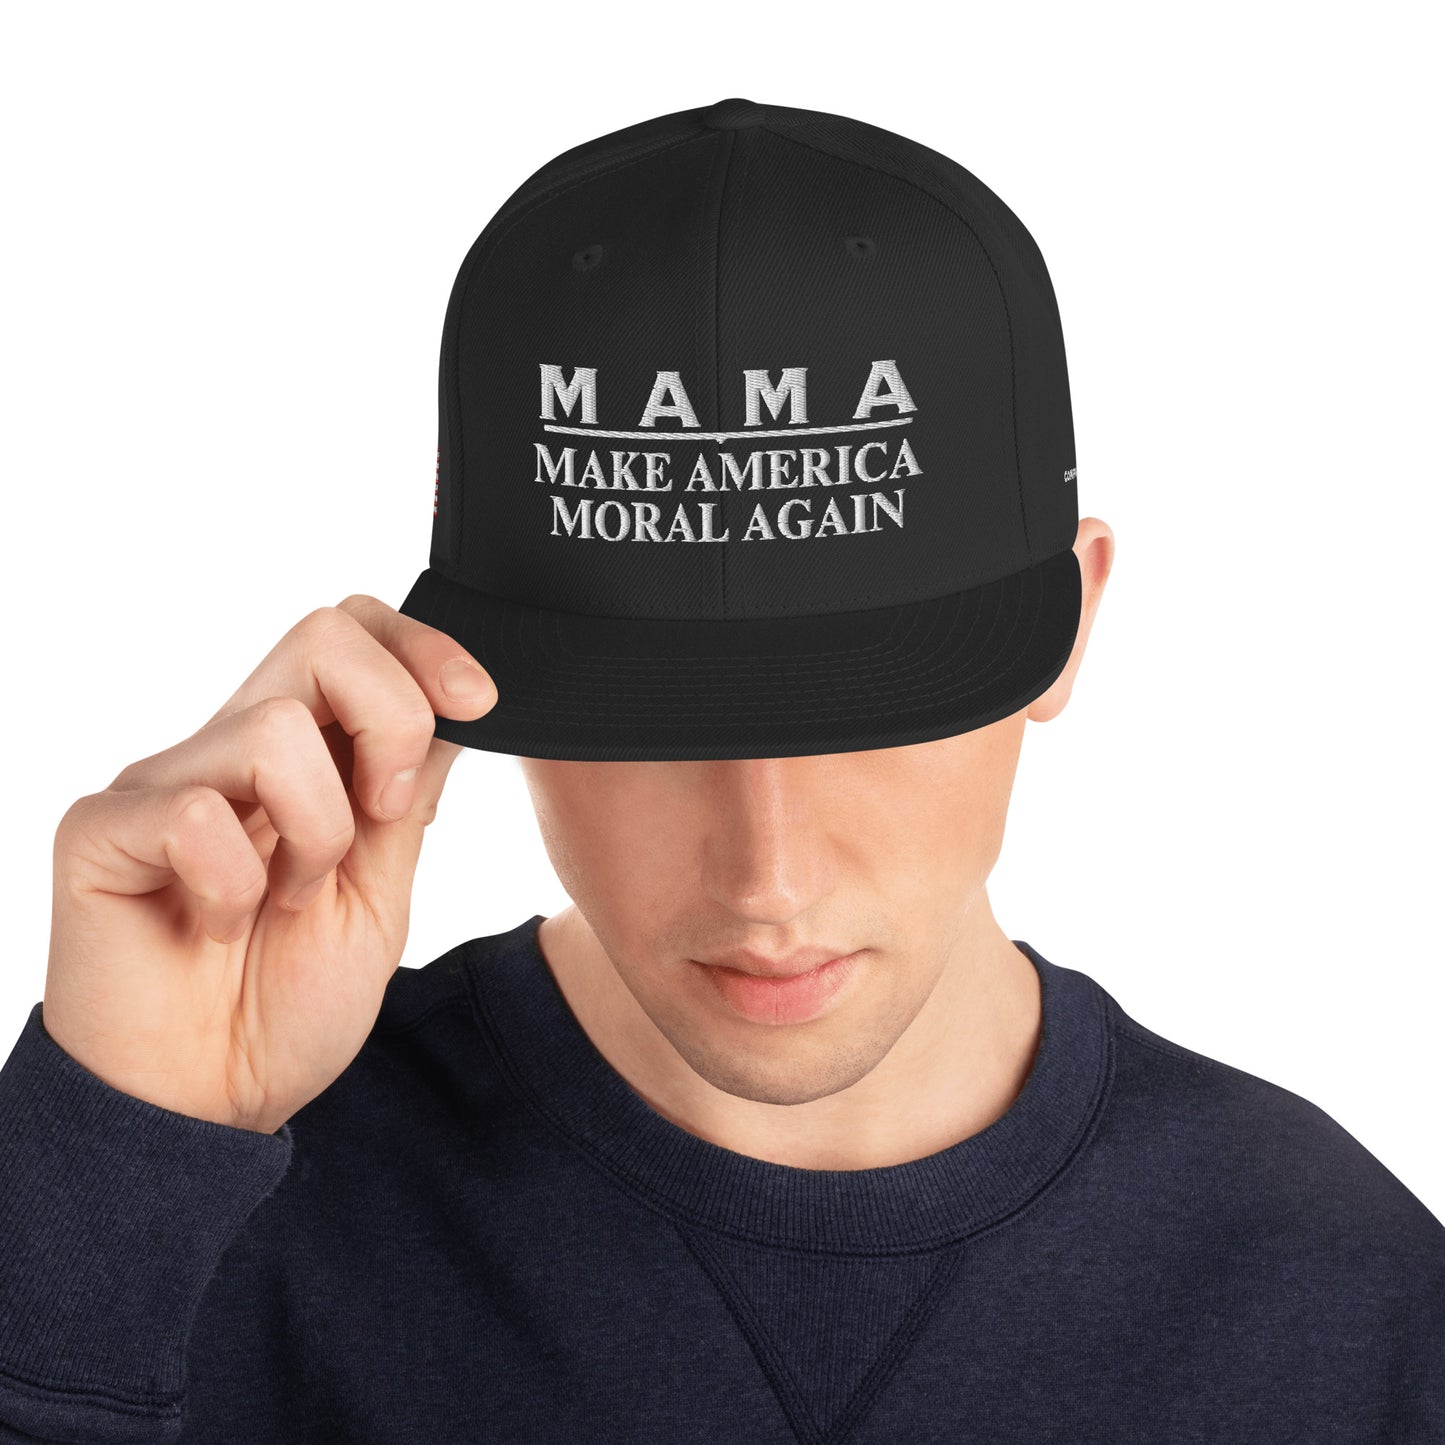 MAMA. Make America Moral Again w/American Flag, Flat Bill Cap (red)